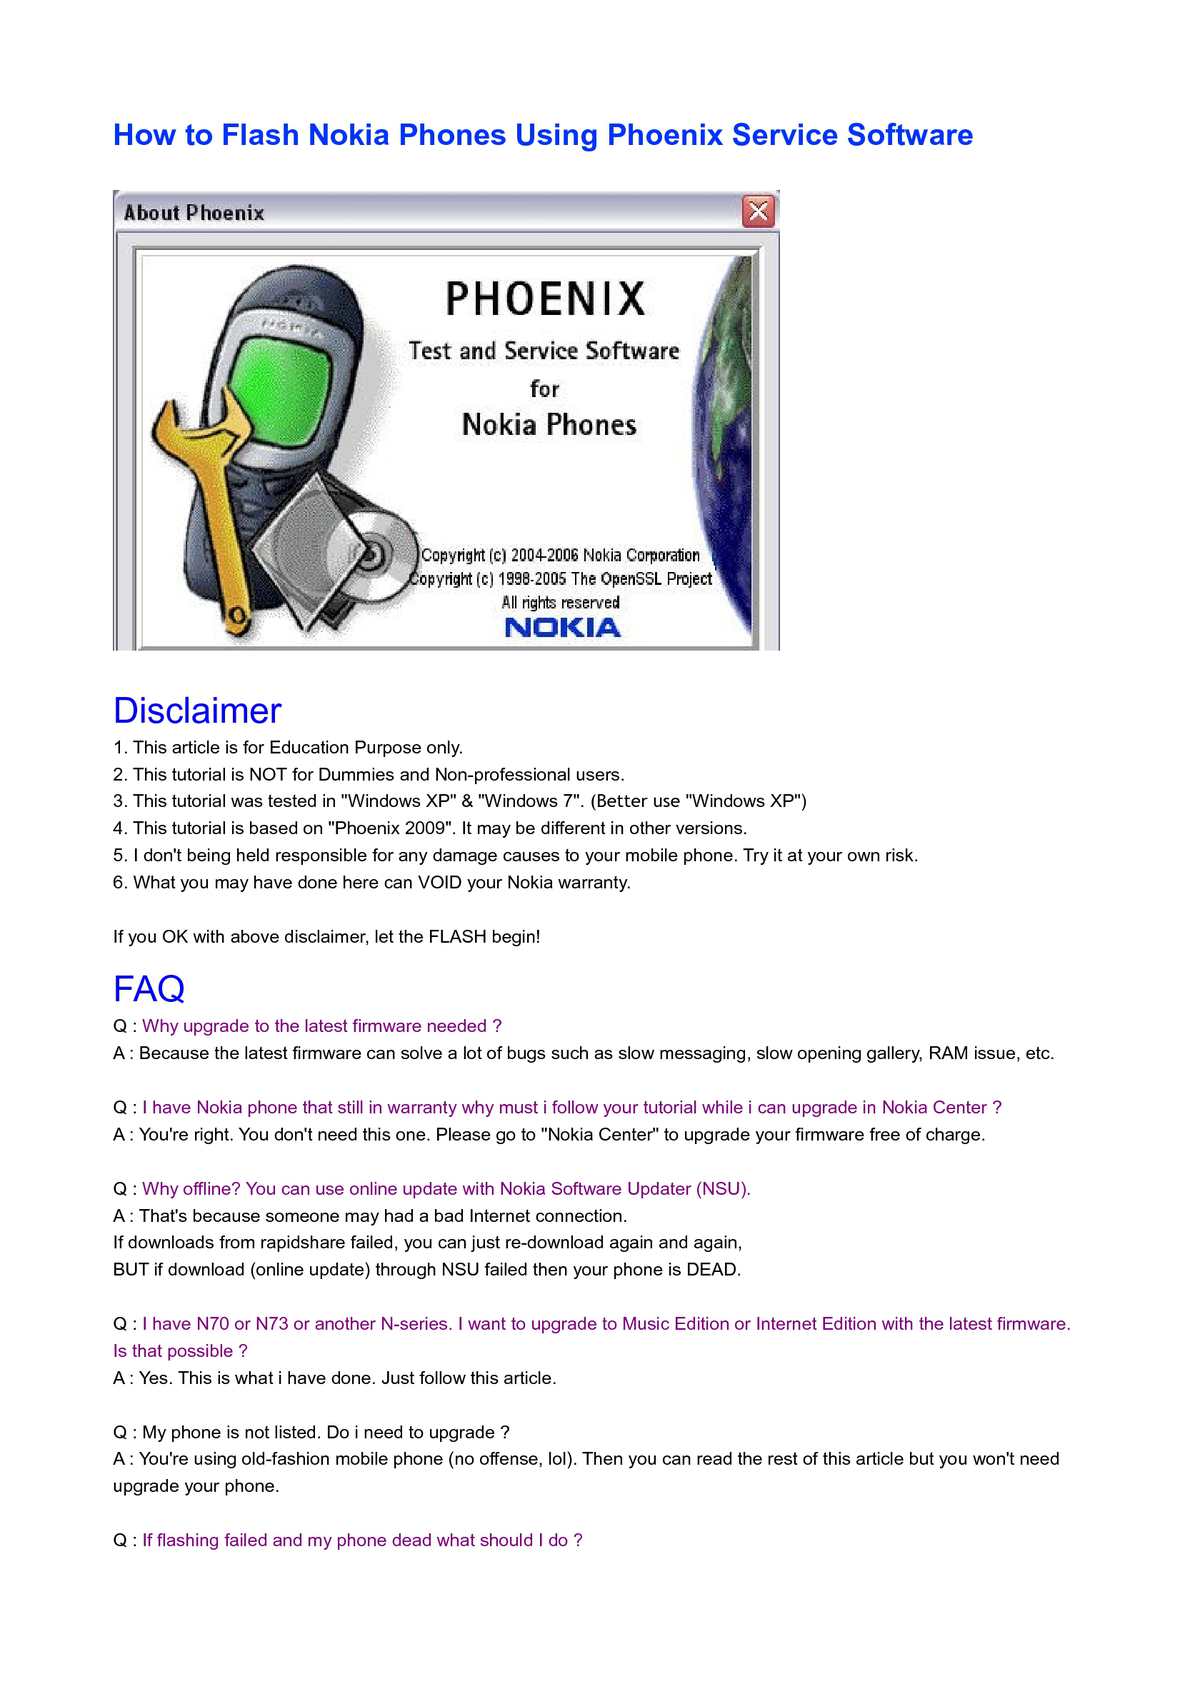 Phoenix service software 2012 full version